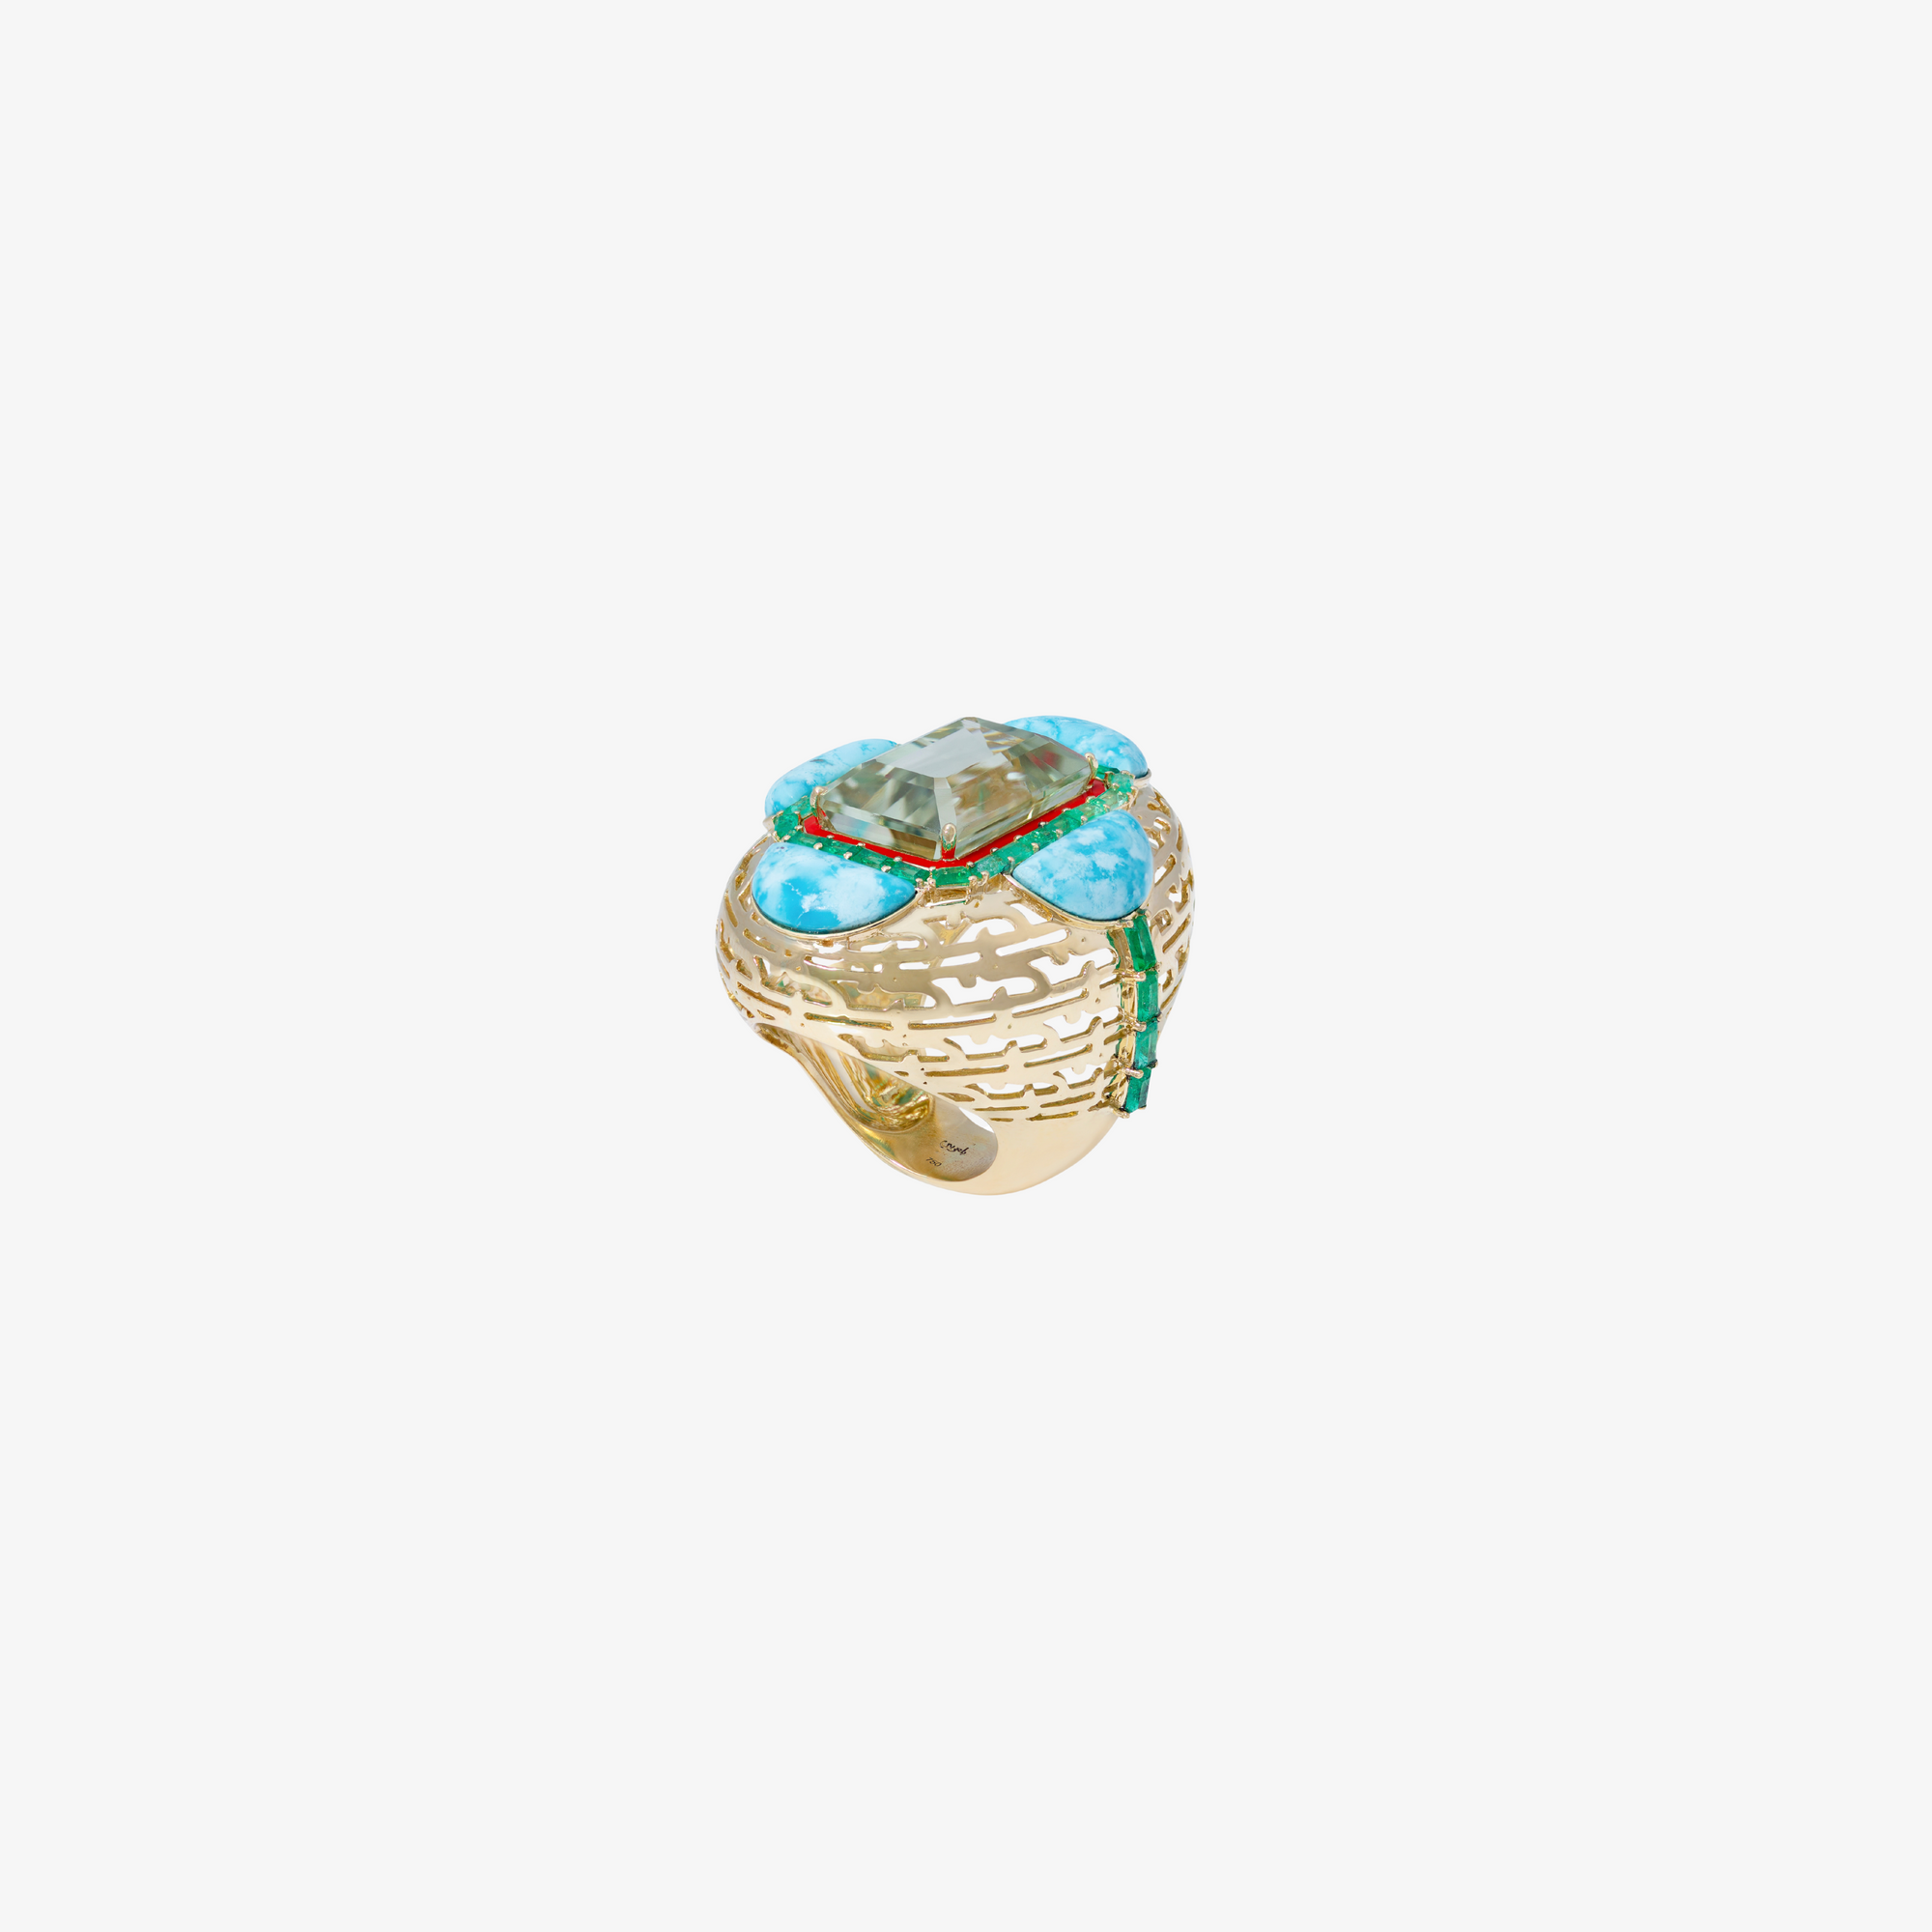 HAWA - 18K Gold, Turquoise, Amethyst & Emerald Ring (Oval Shape)